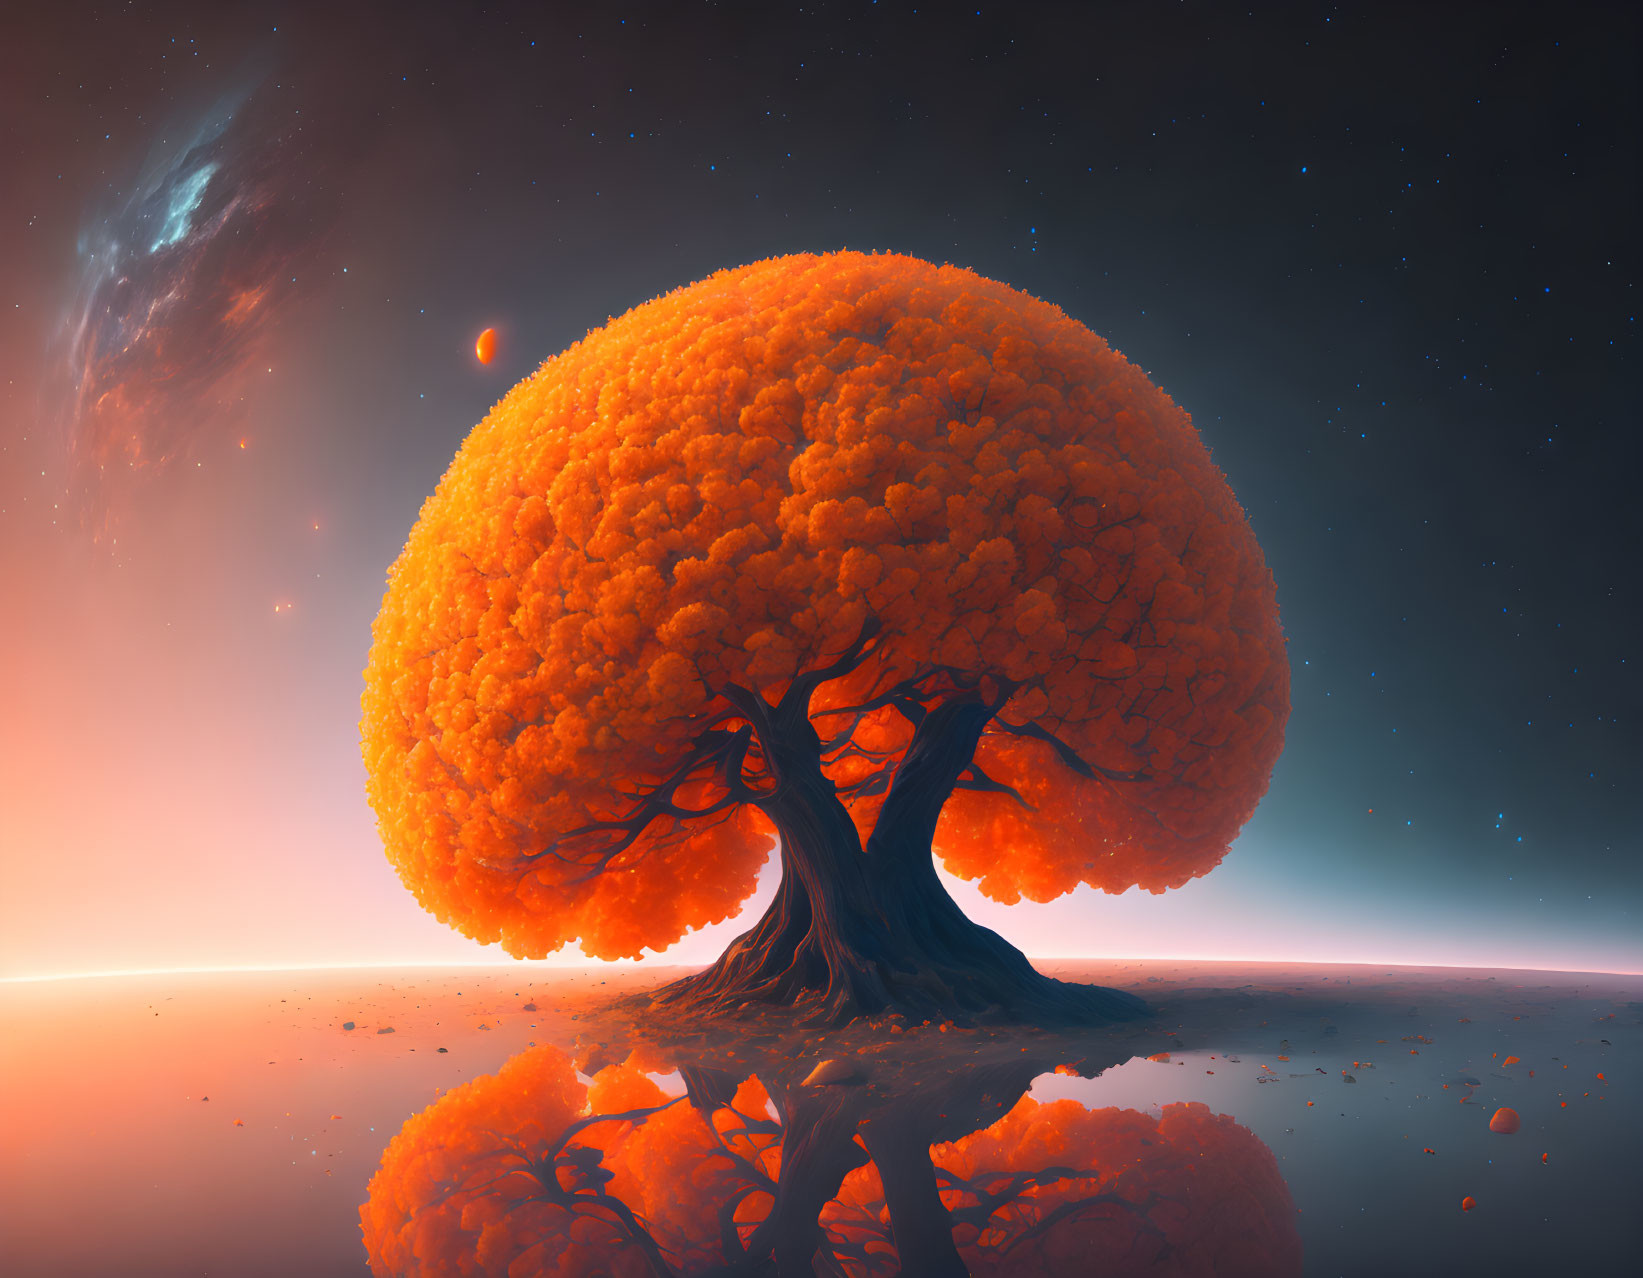 Vibrant orange tree on reflective surface under starry sky